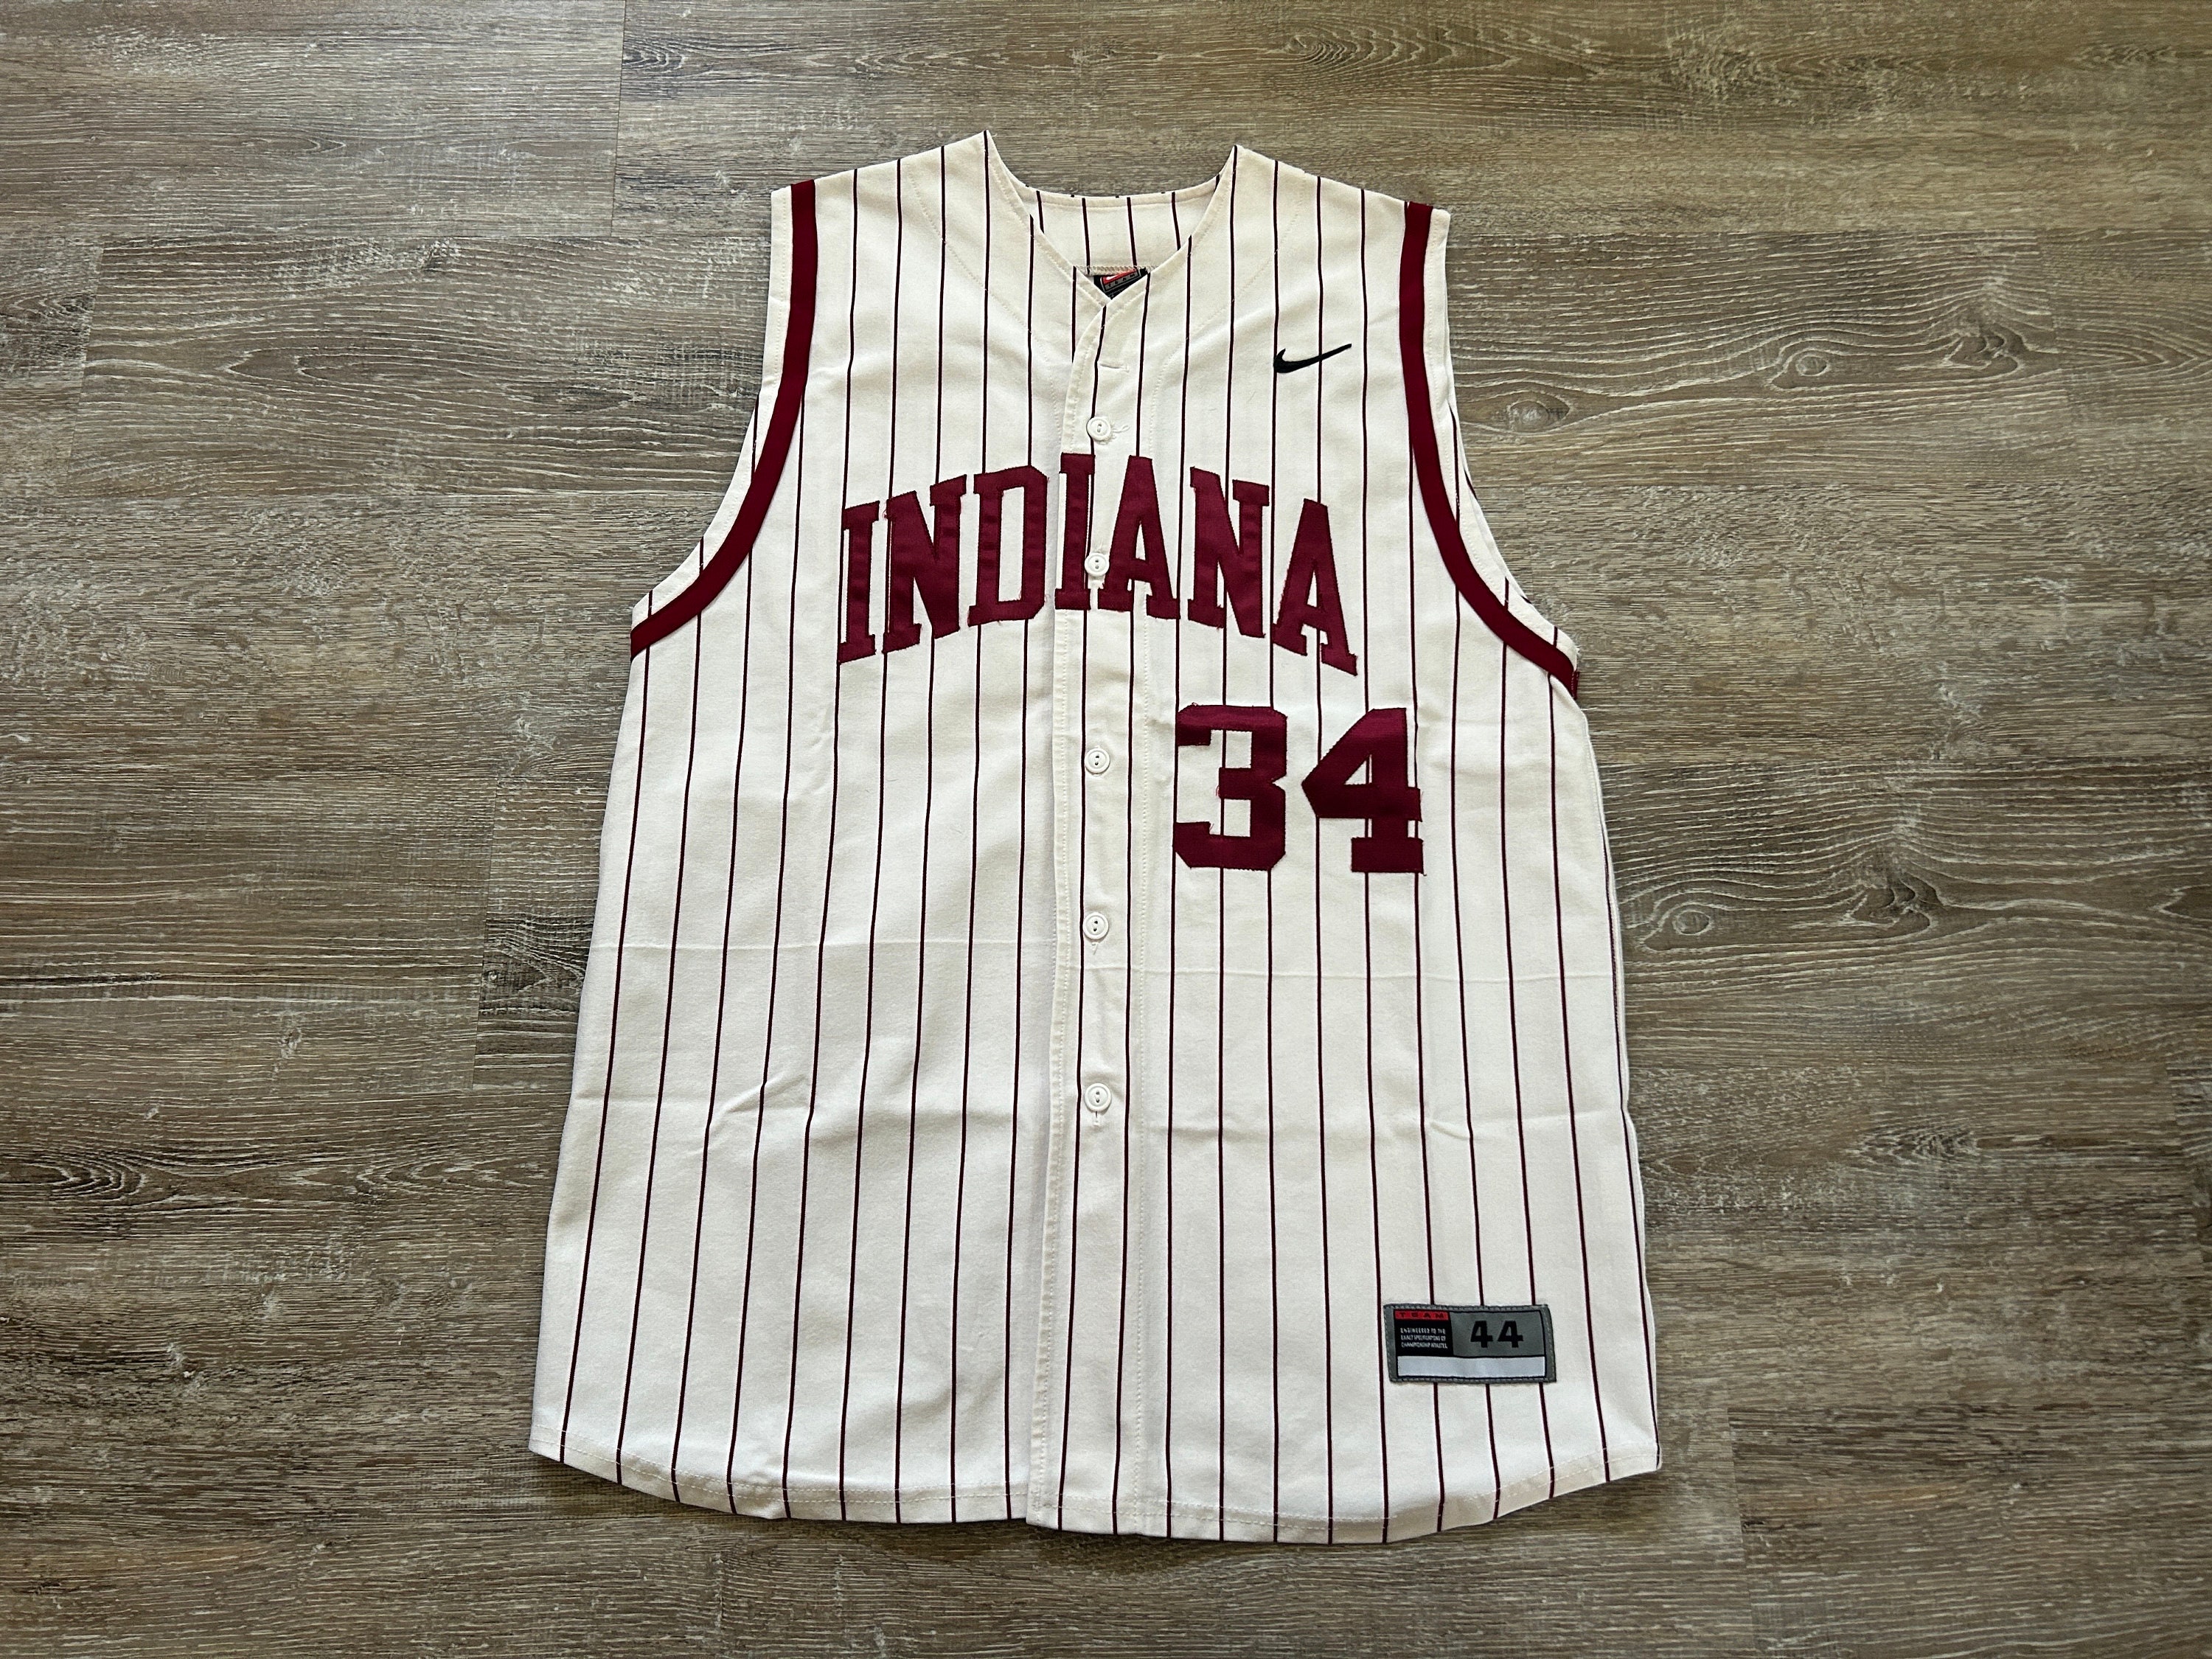 Adidas Indiana University Hoosiers Basketball Jersey Size 3T